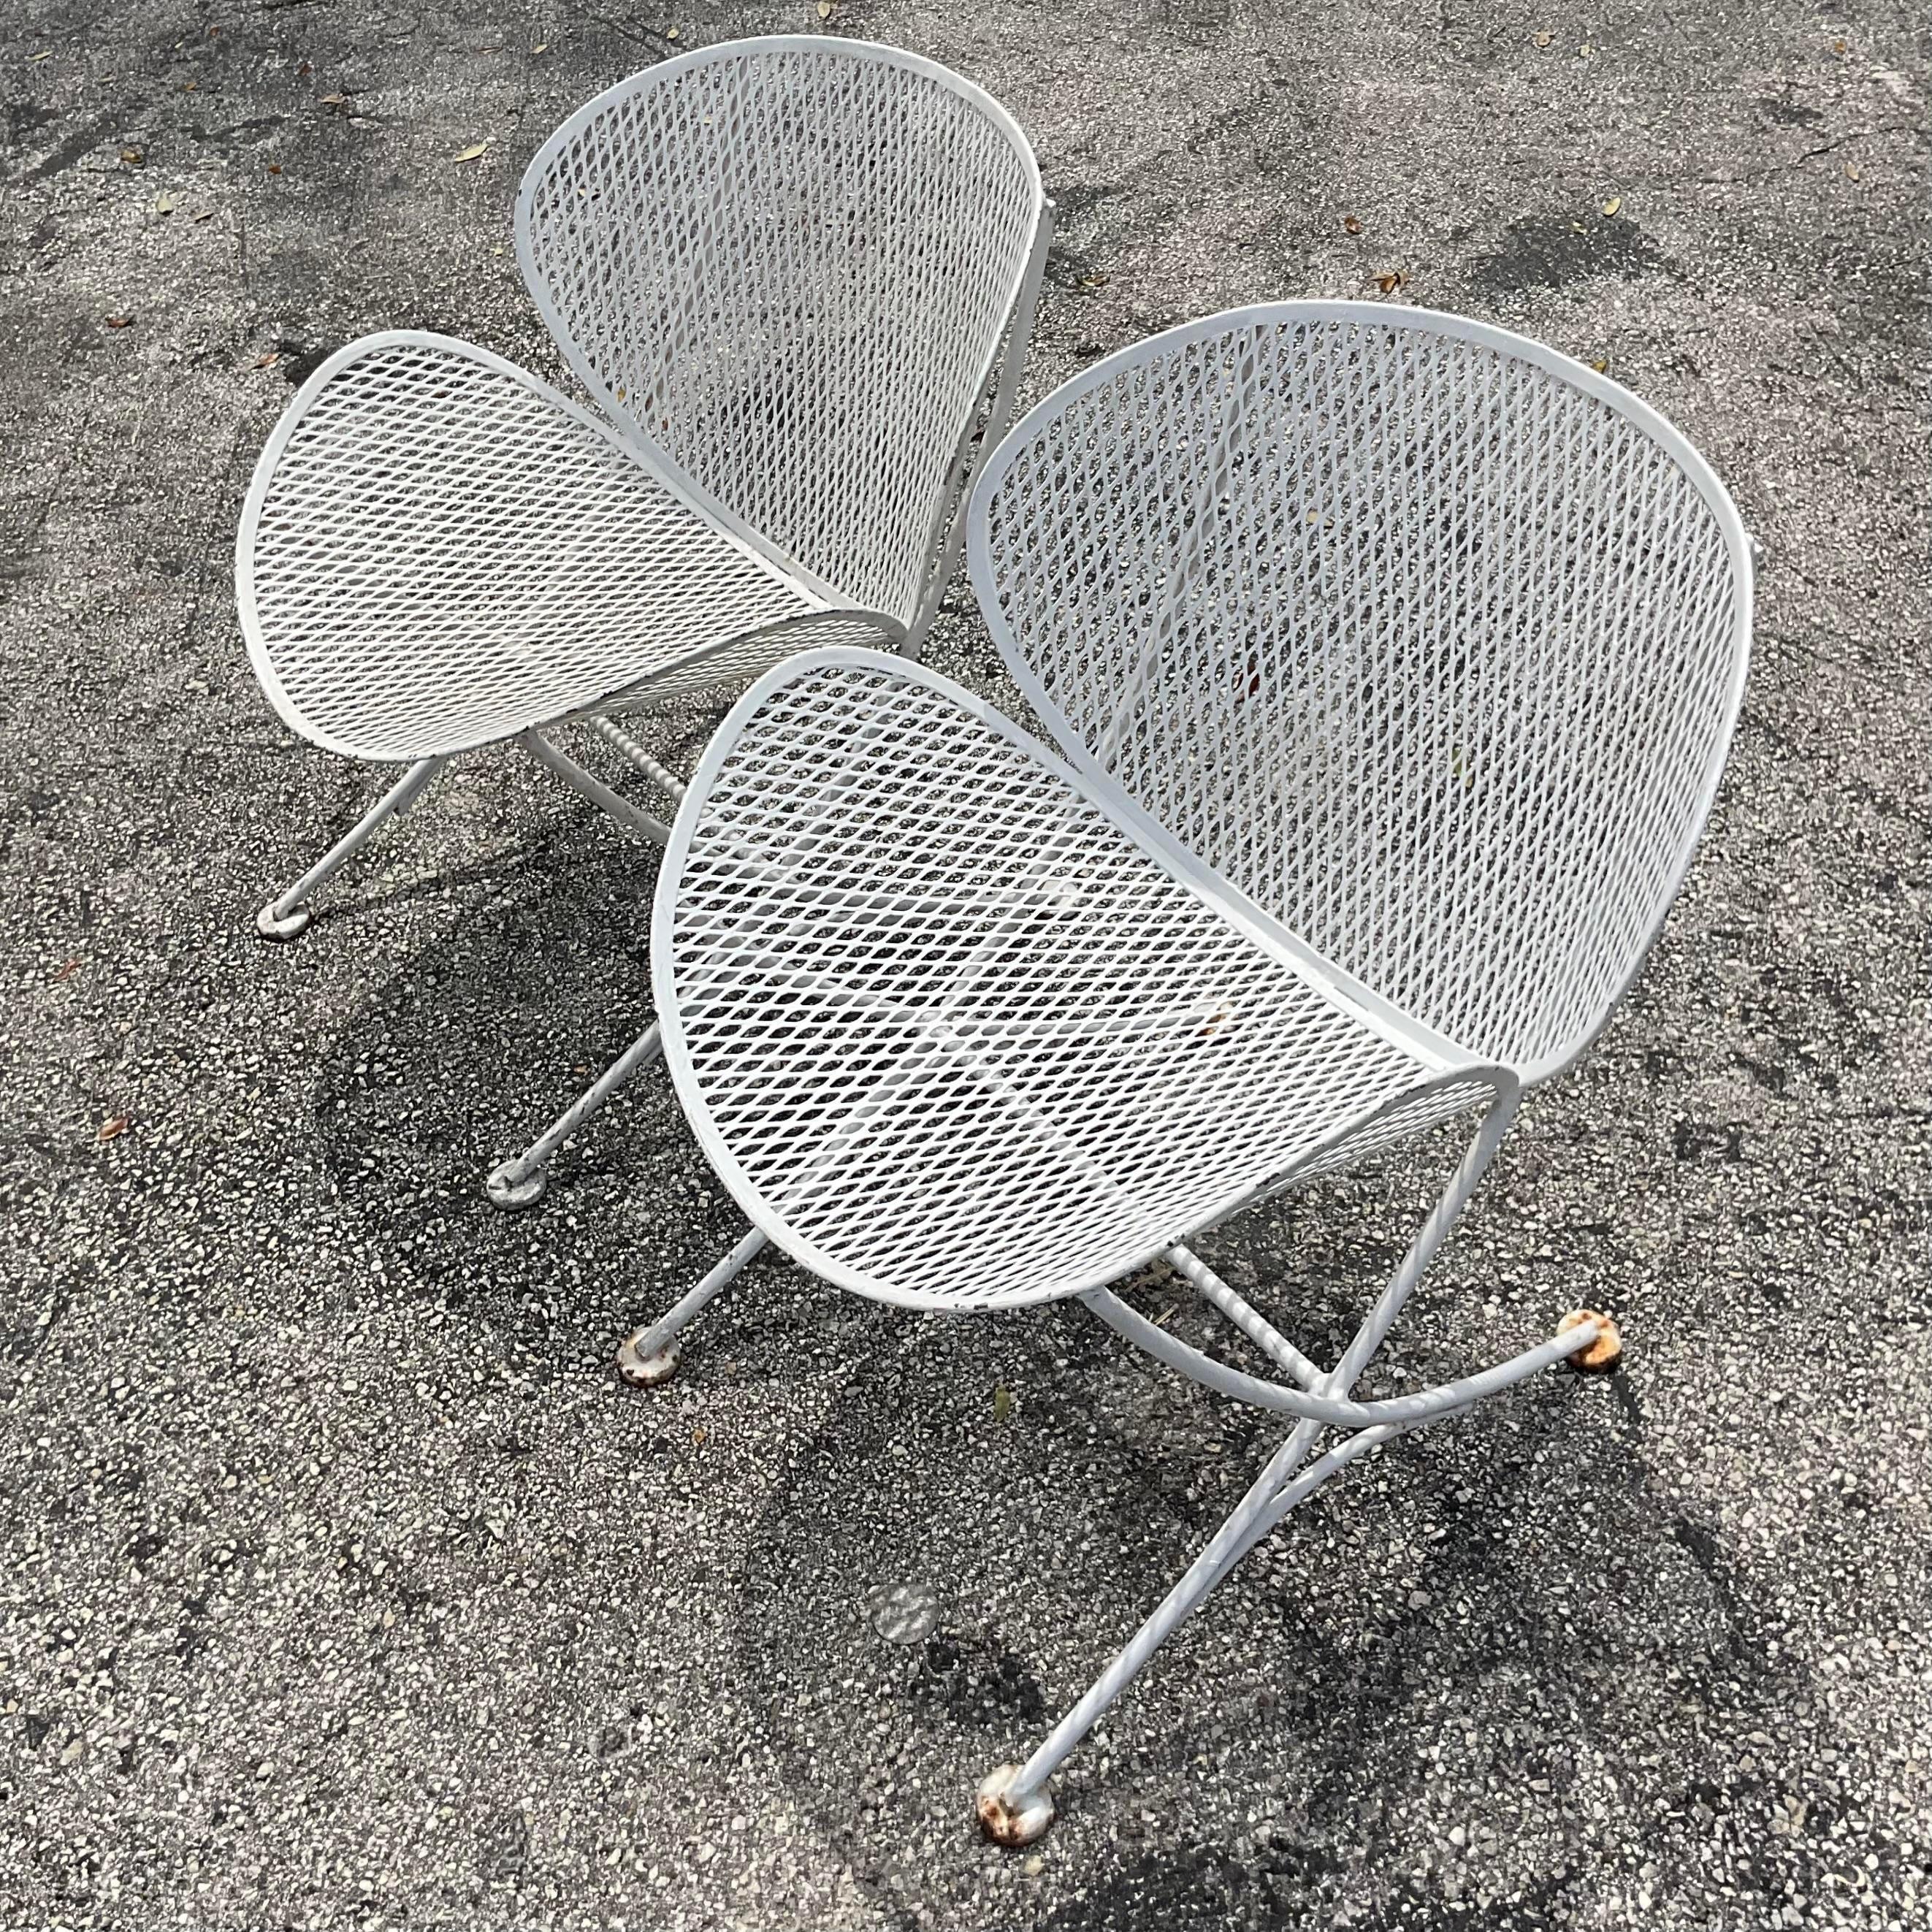 20th Century Vintage Mid-Century Modern Salterini Wrought Iron “Orange Slice” Chairs - a Pair For Sale